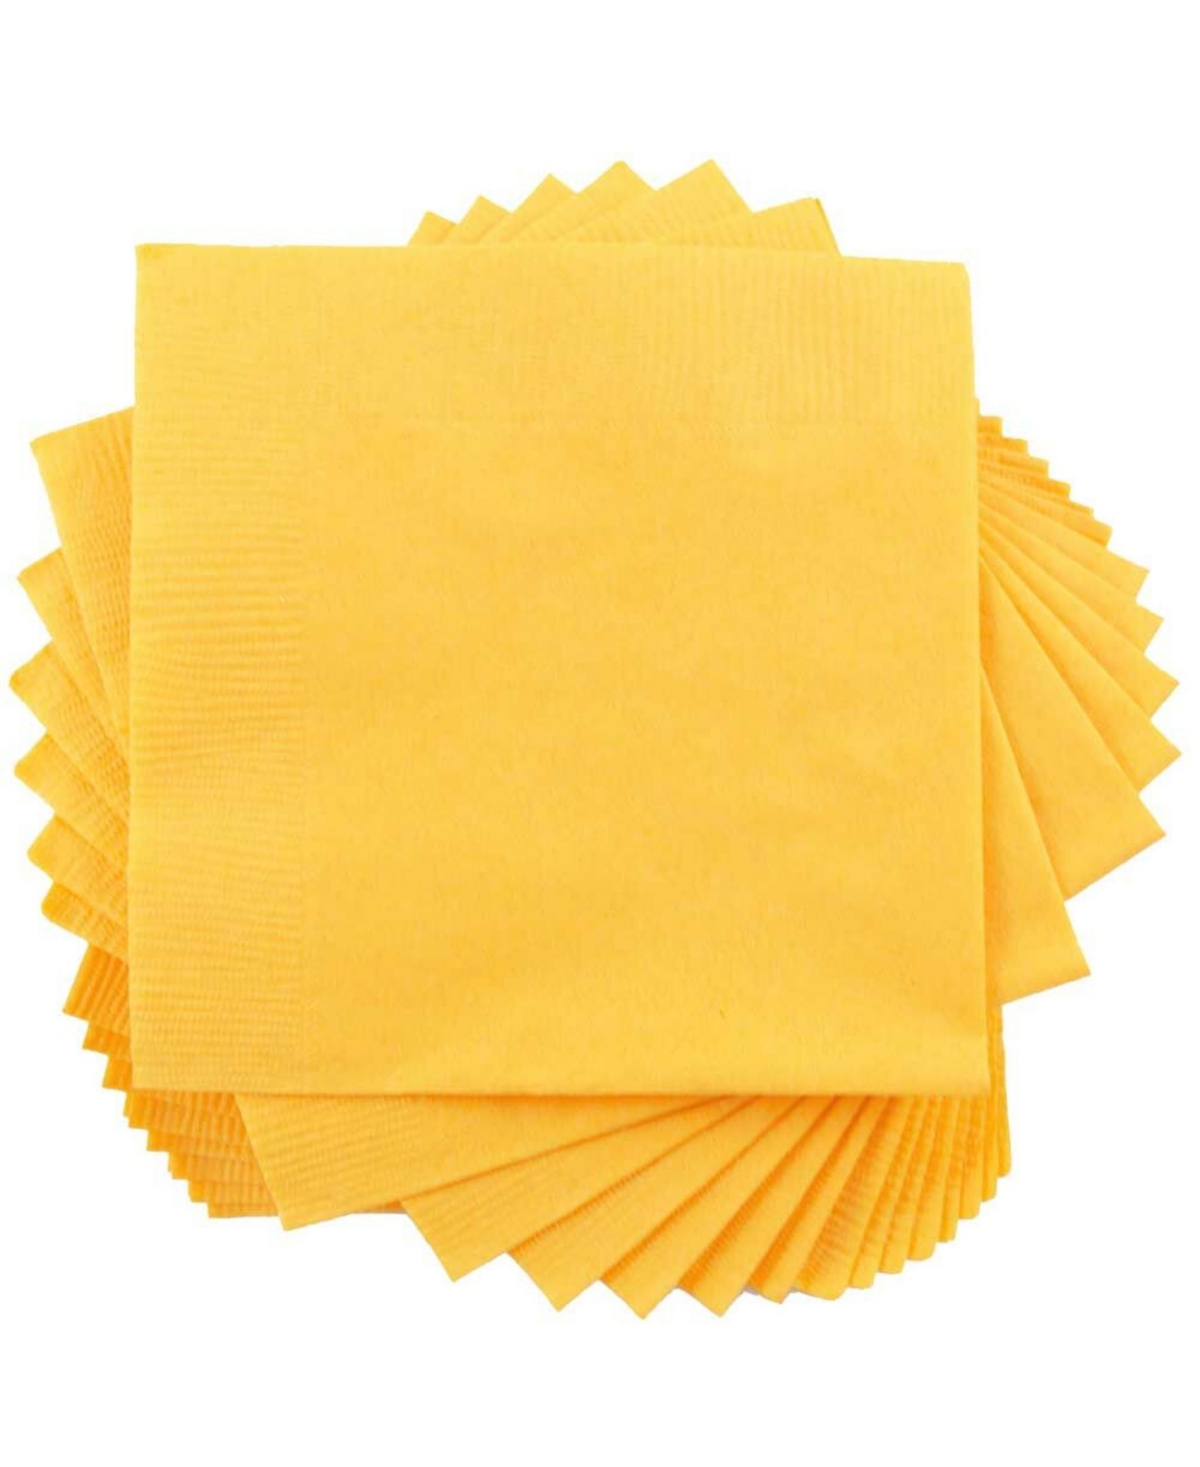 Jam Paper Medium Lunch Napkins In Yellow